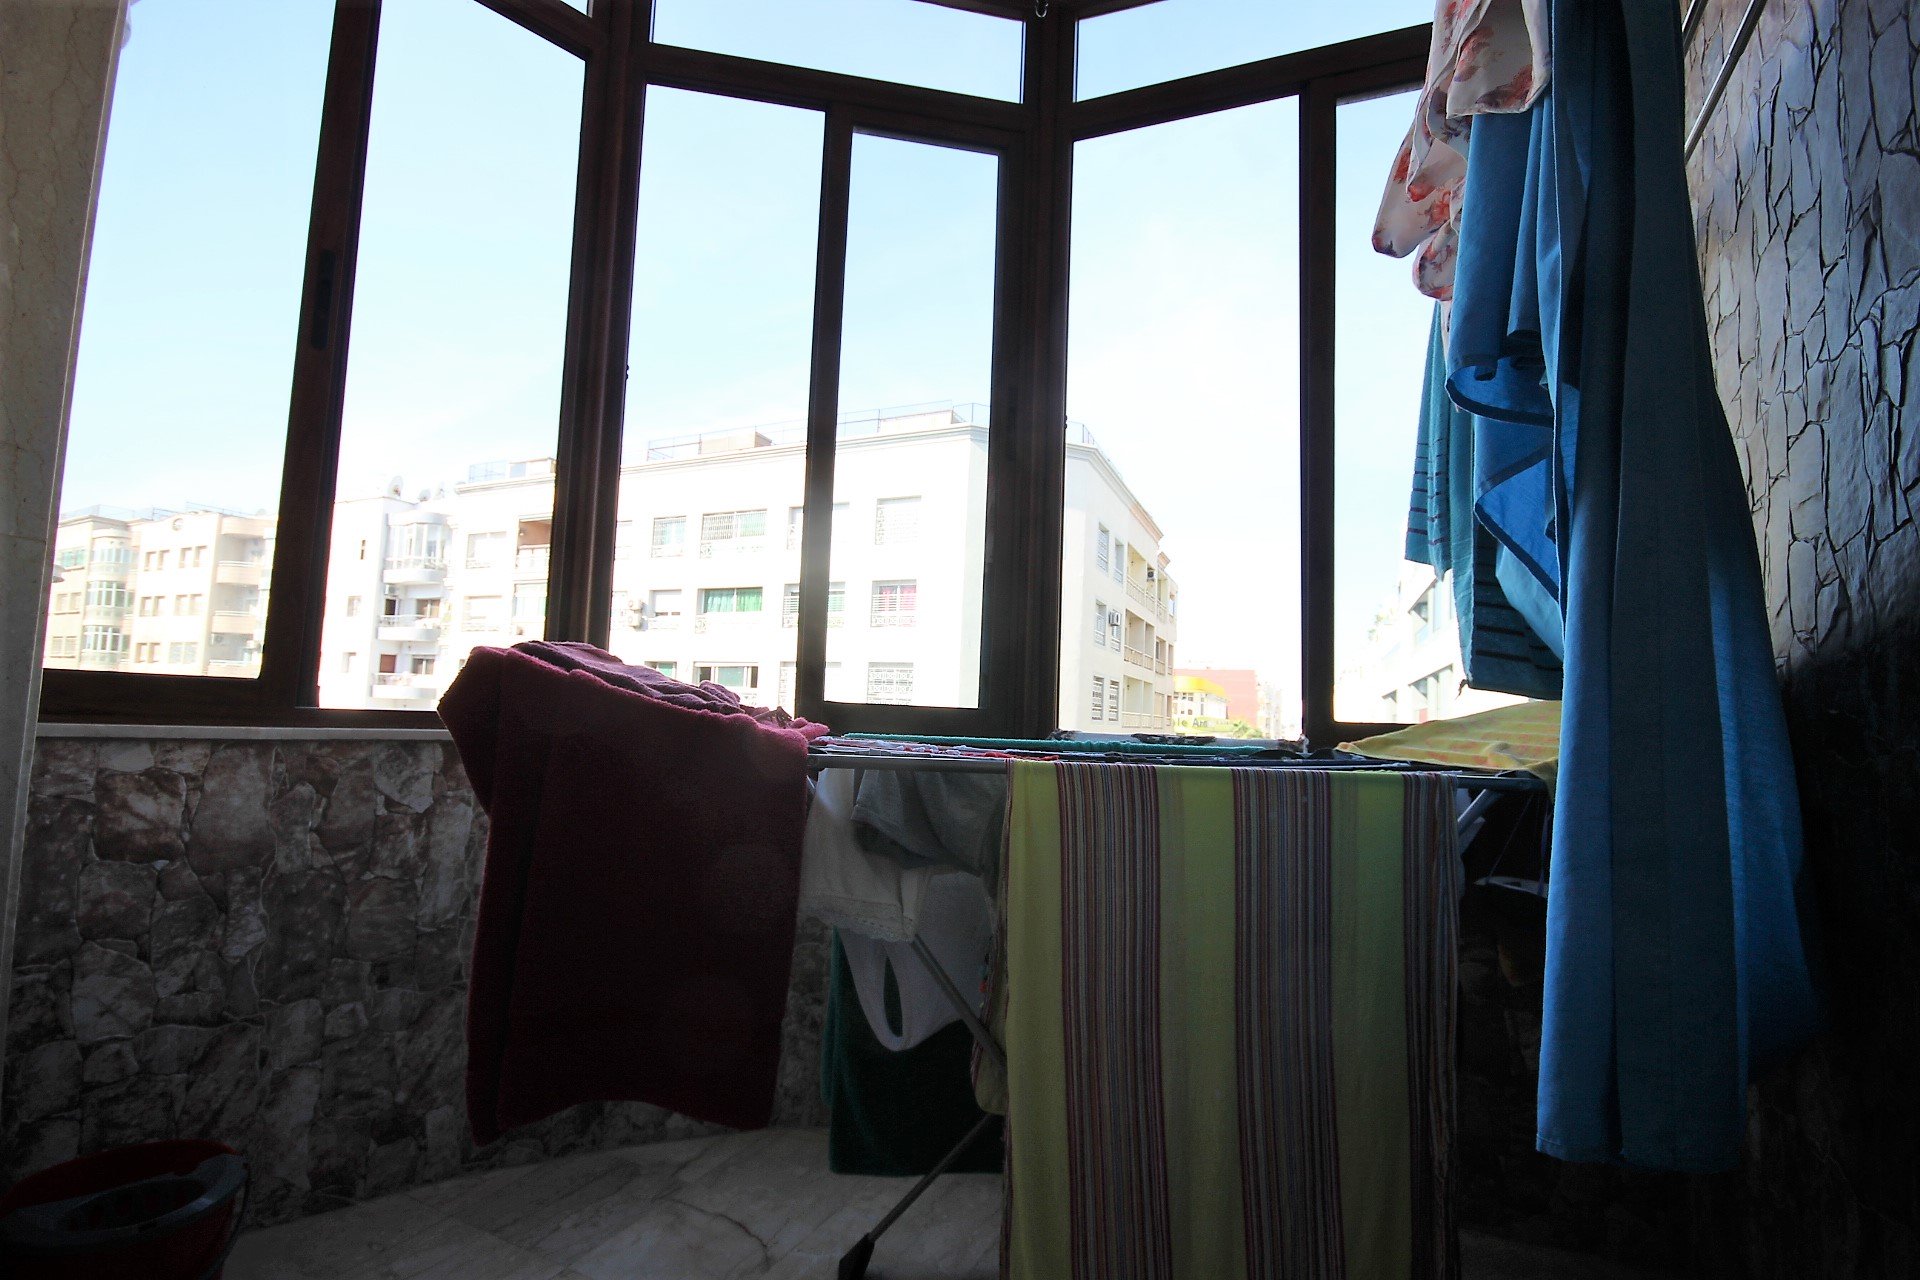 Maroc, Casablanca, 2 mars, Loue parfait meublé 3 chambres + balcon